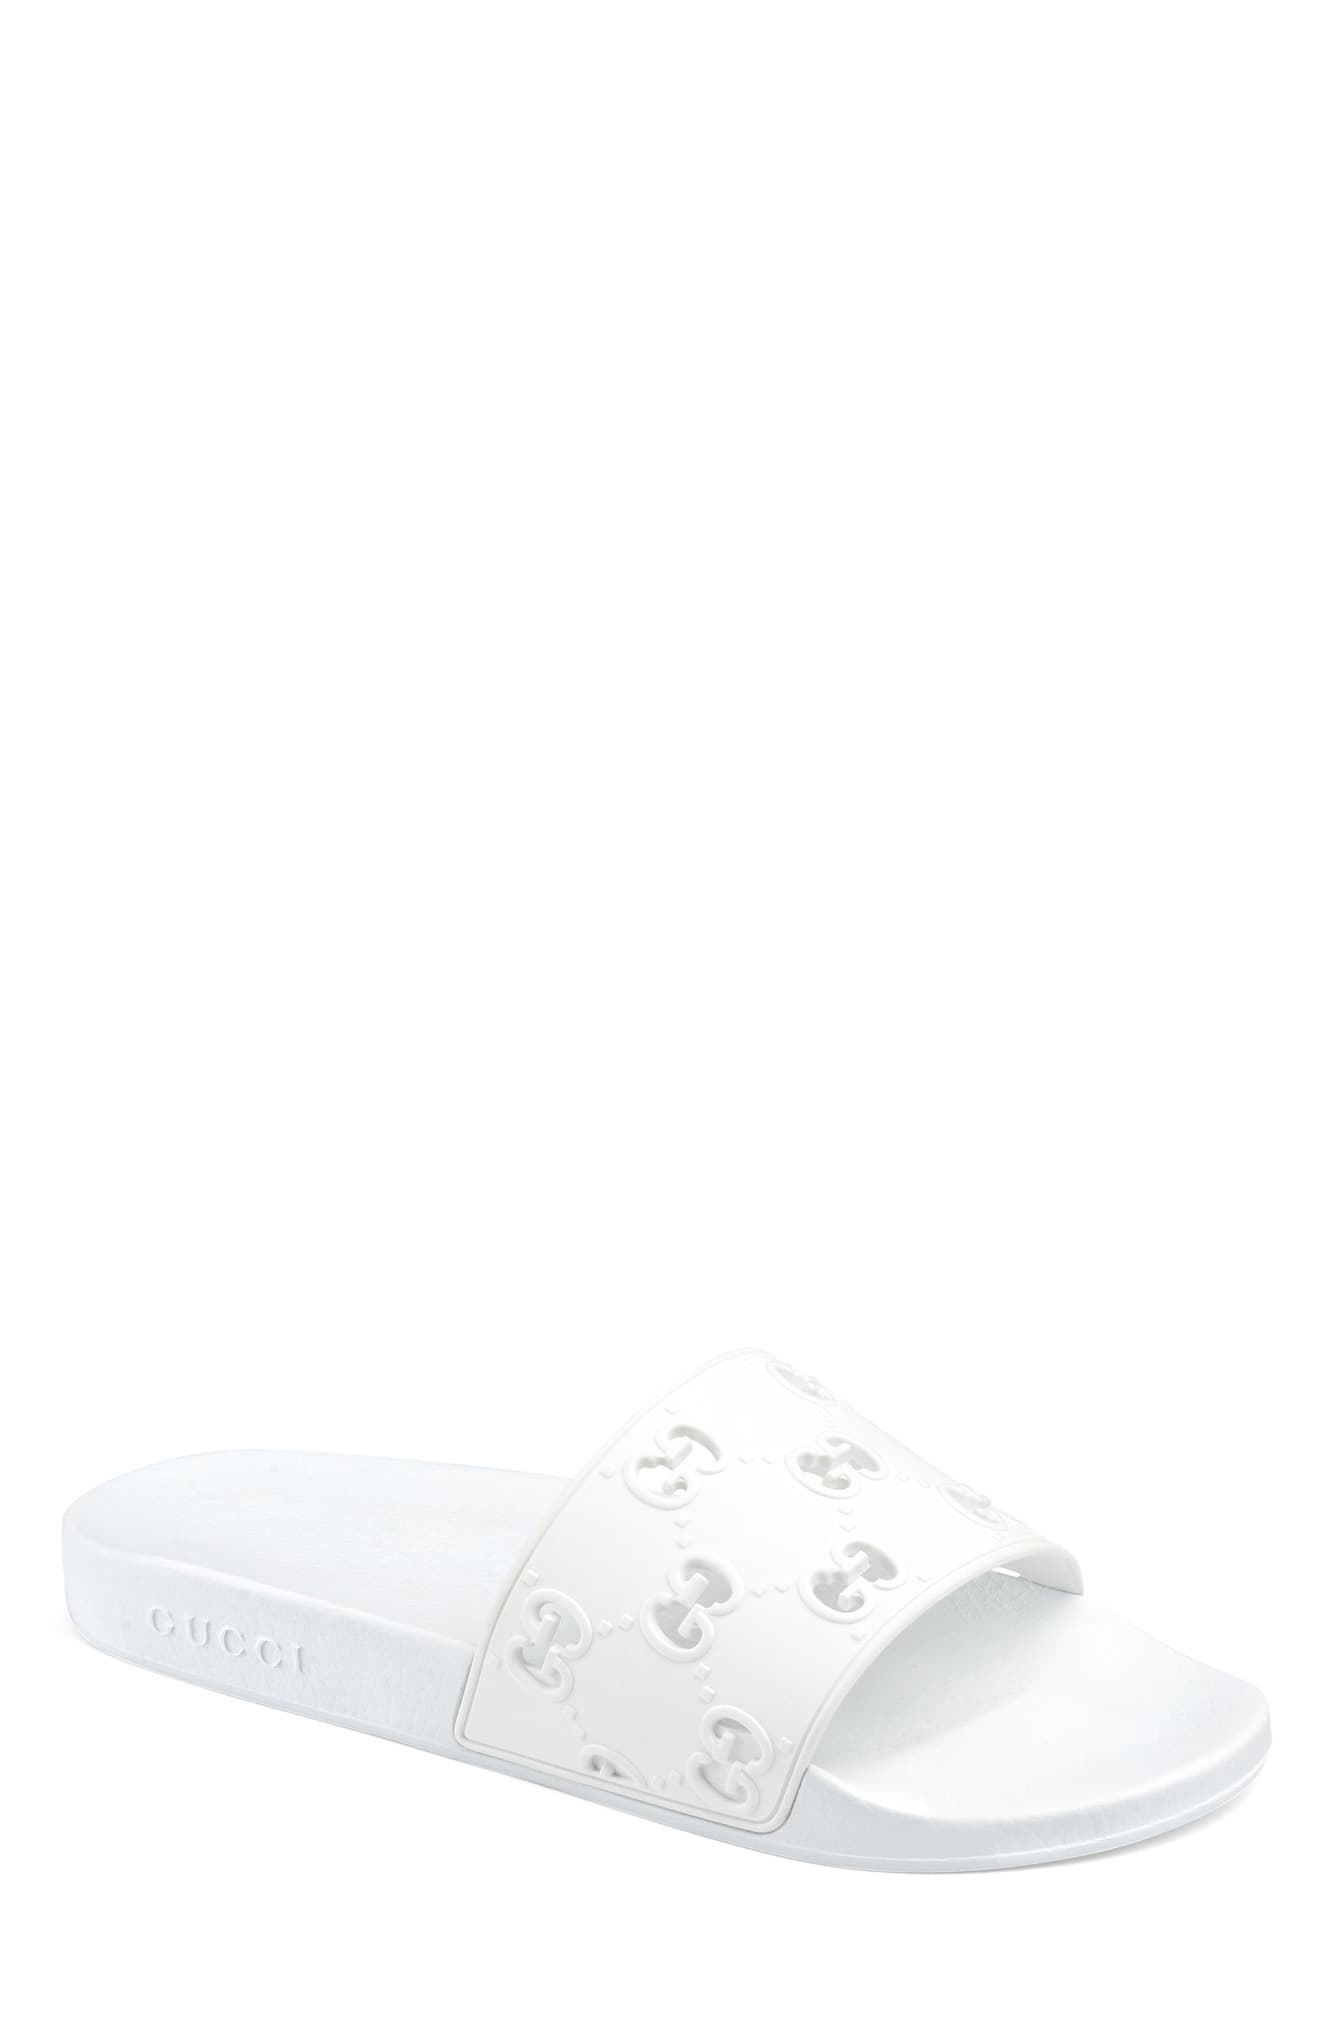 Men’s Gucci Pursuit Gg Logo Slide Sandal, Size 7US / 6UK – White | The ...